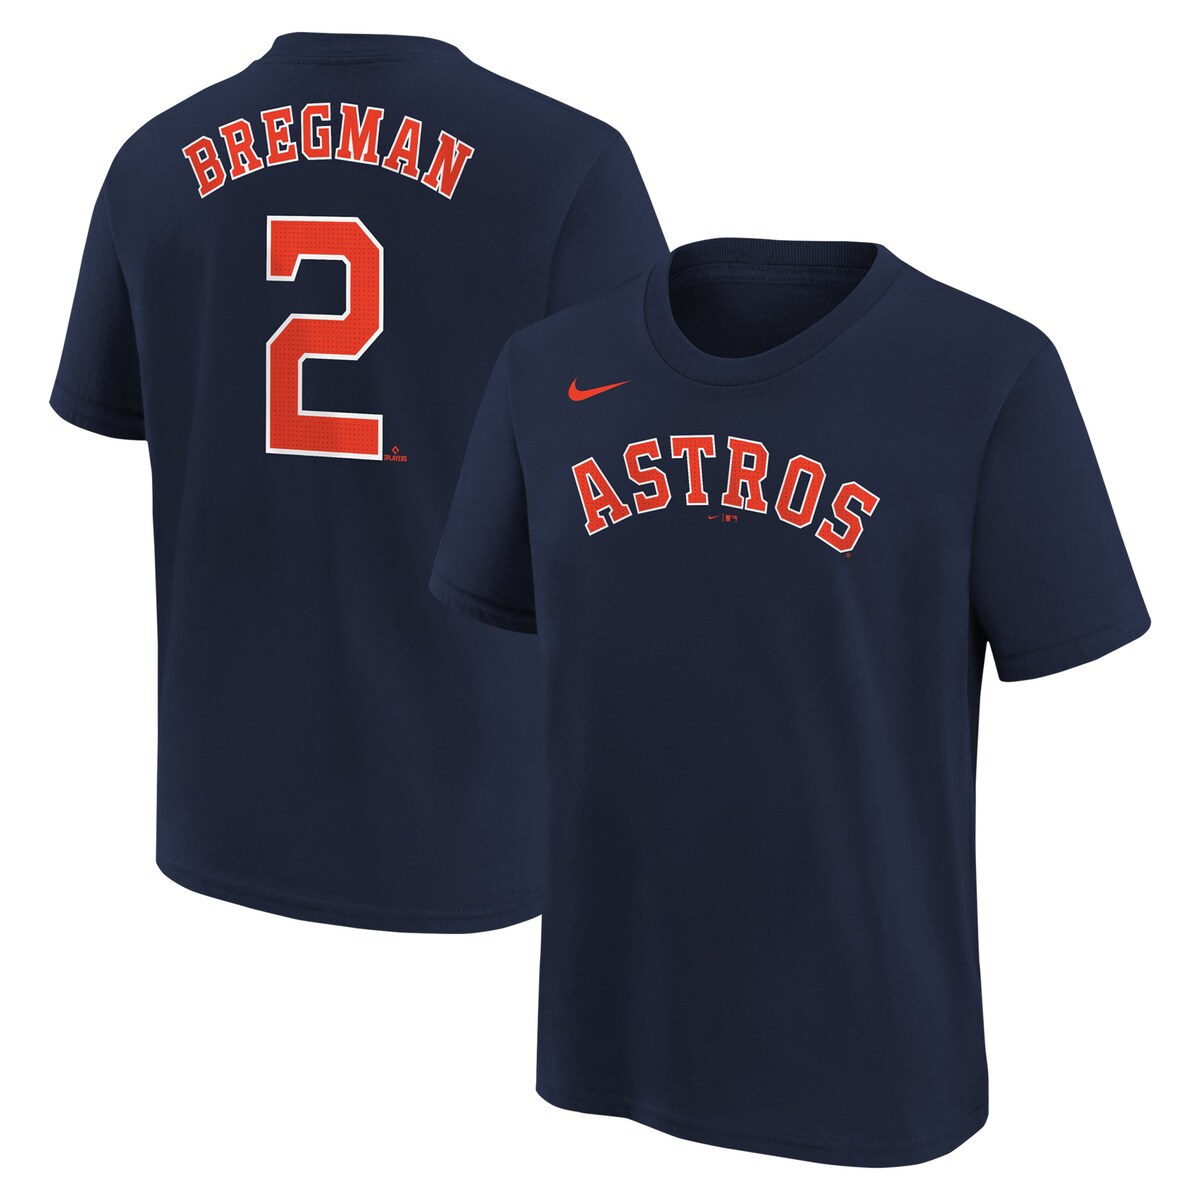 MLB アストロズ アレックス・ブレグマン ネーム&ナンバー Tシャツ Nike ナイキ キッズ ネイビー (24 Nike Youth Home NN Tee)